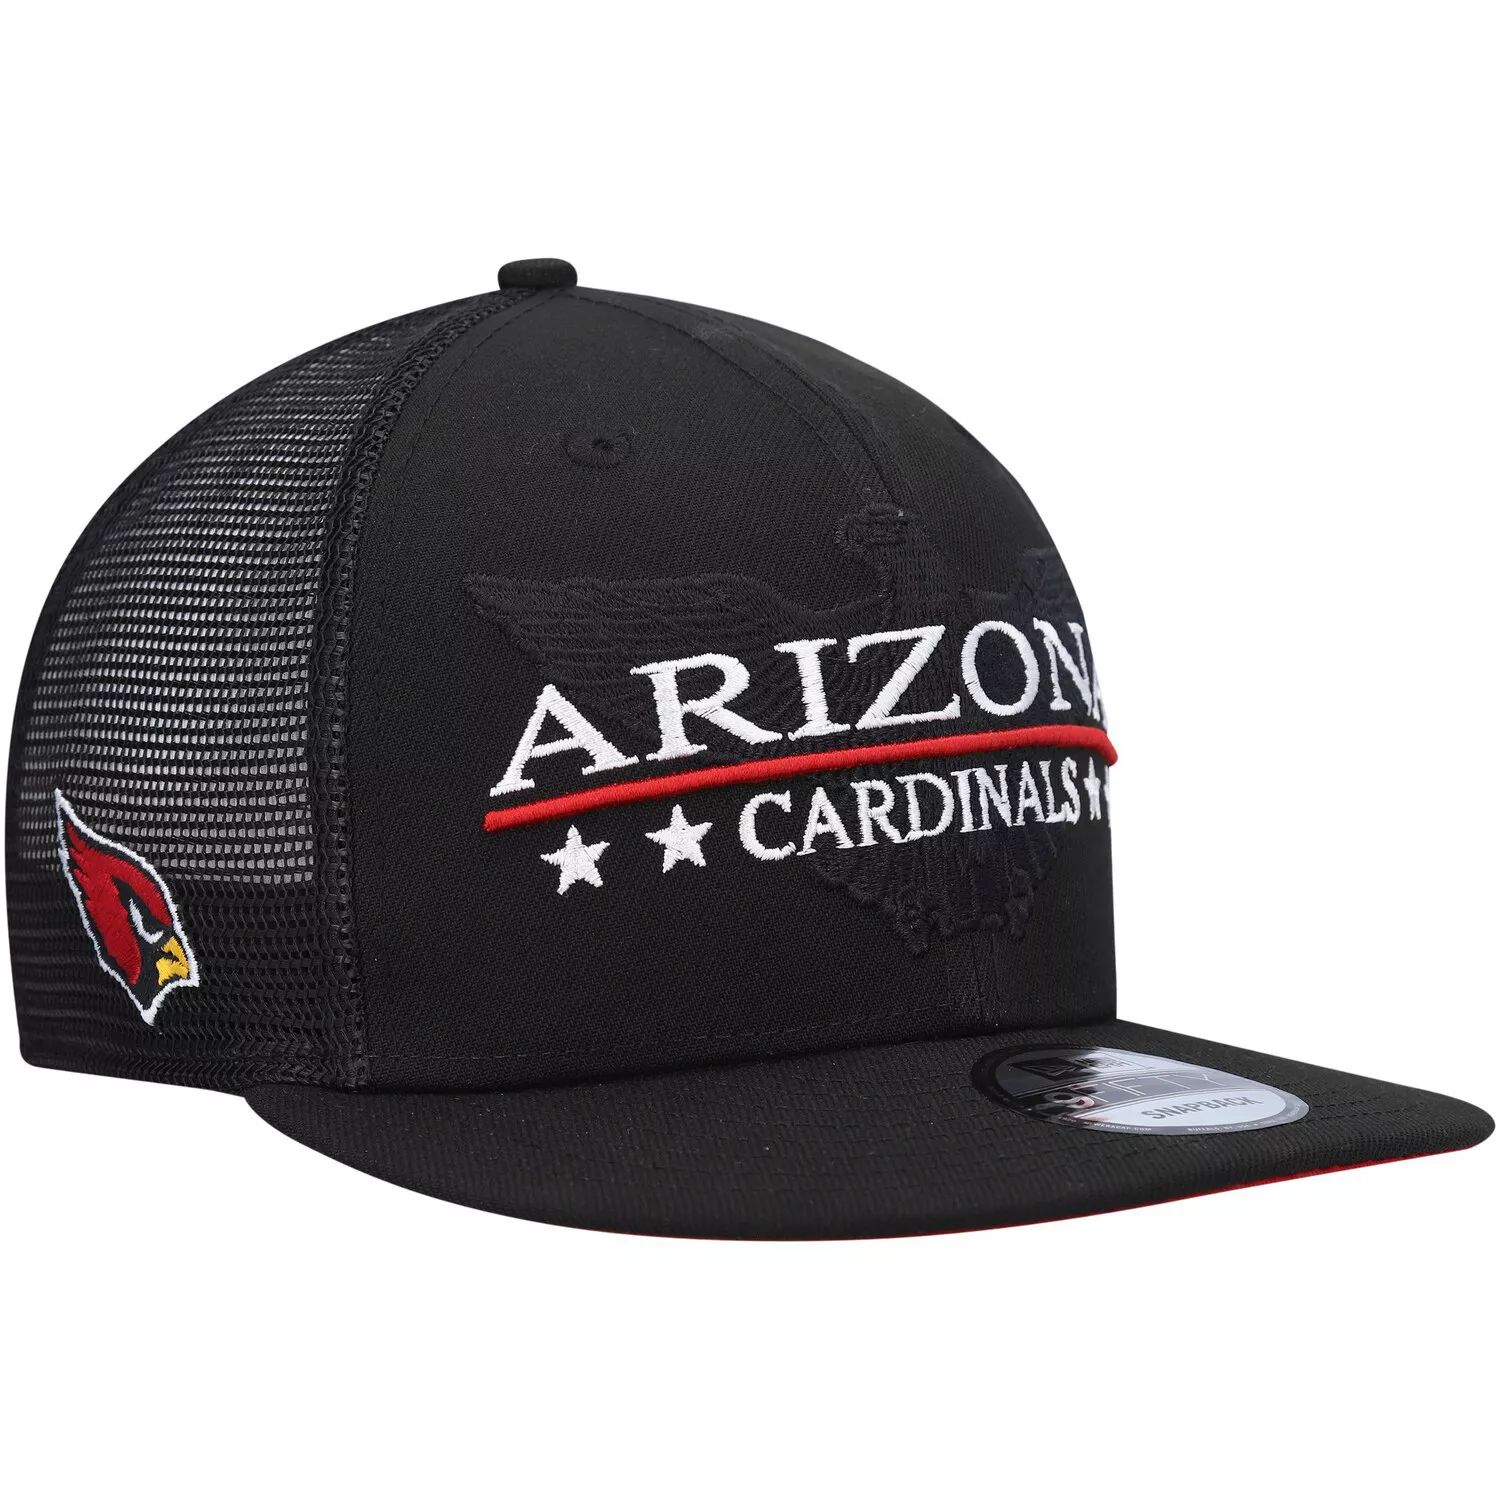 Мужская кепка New Era Black Arizona Cardinals Totem 9FIFTY Snapback мужская кепка cardinal черная arizona cardinals flawless 9fifty snapback new era